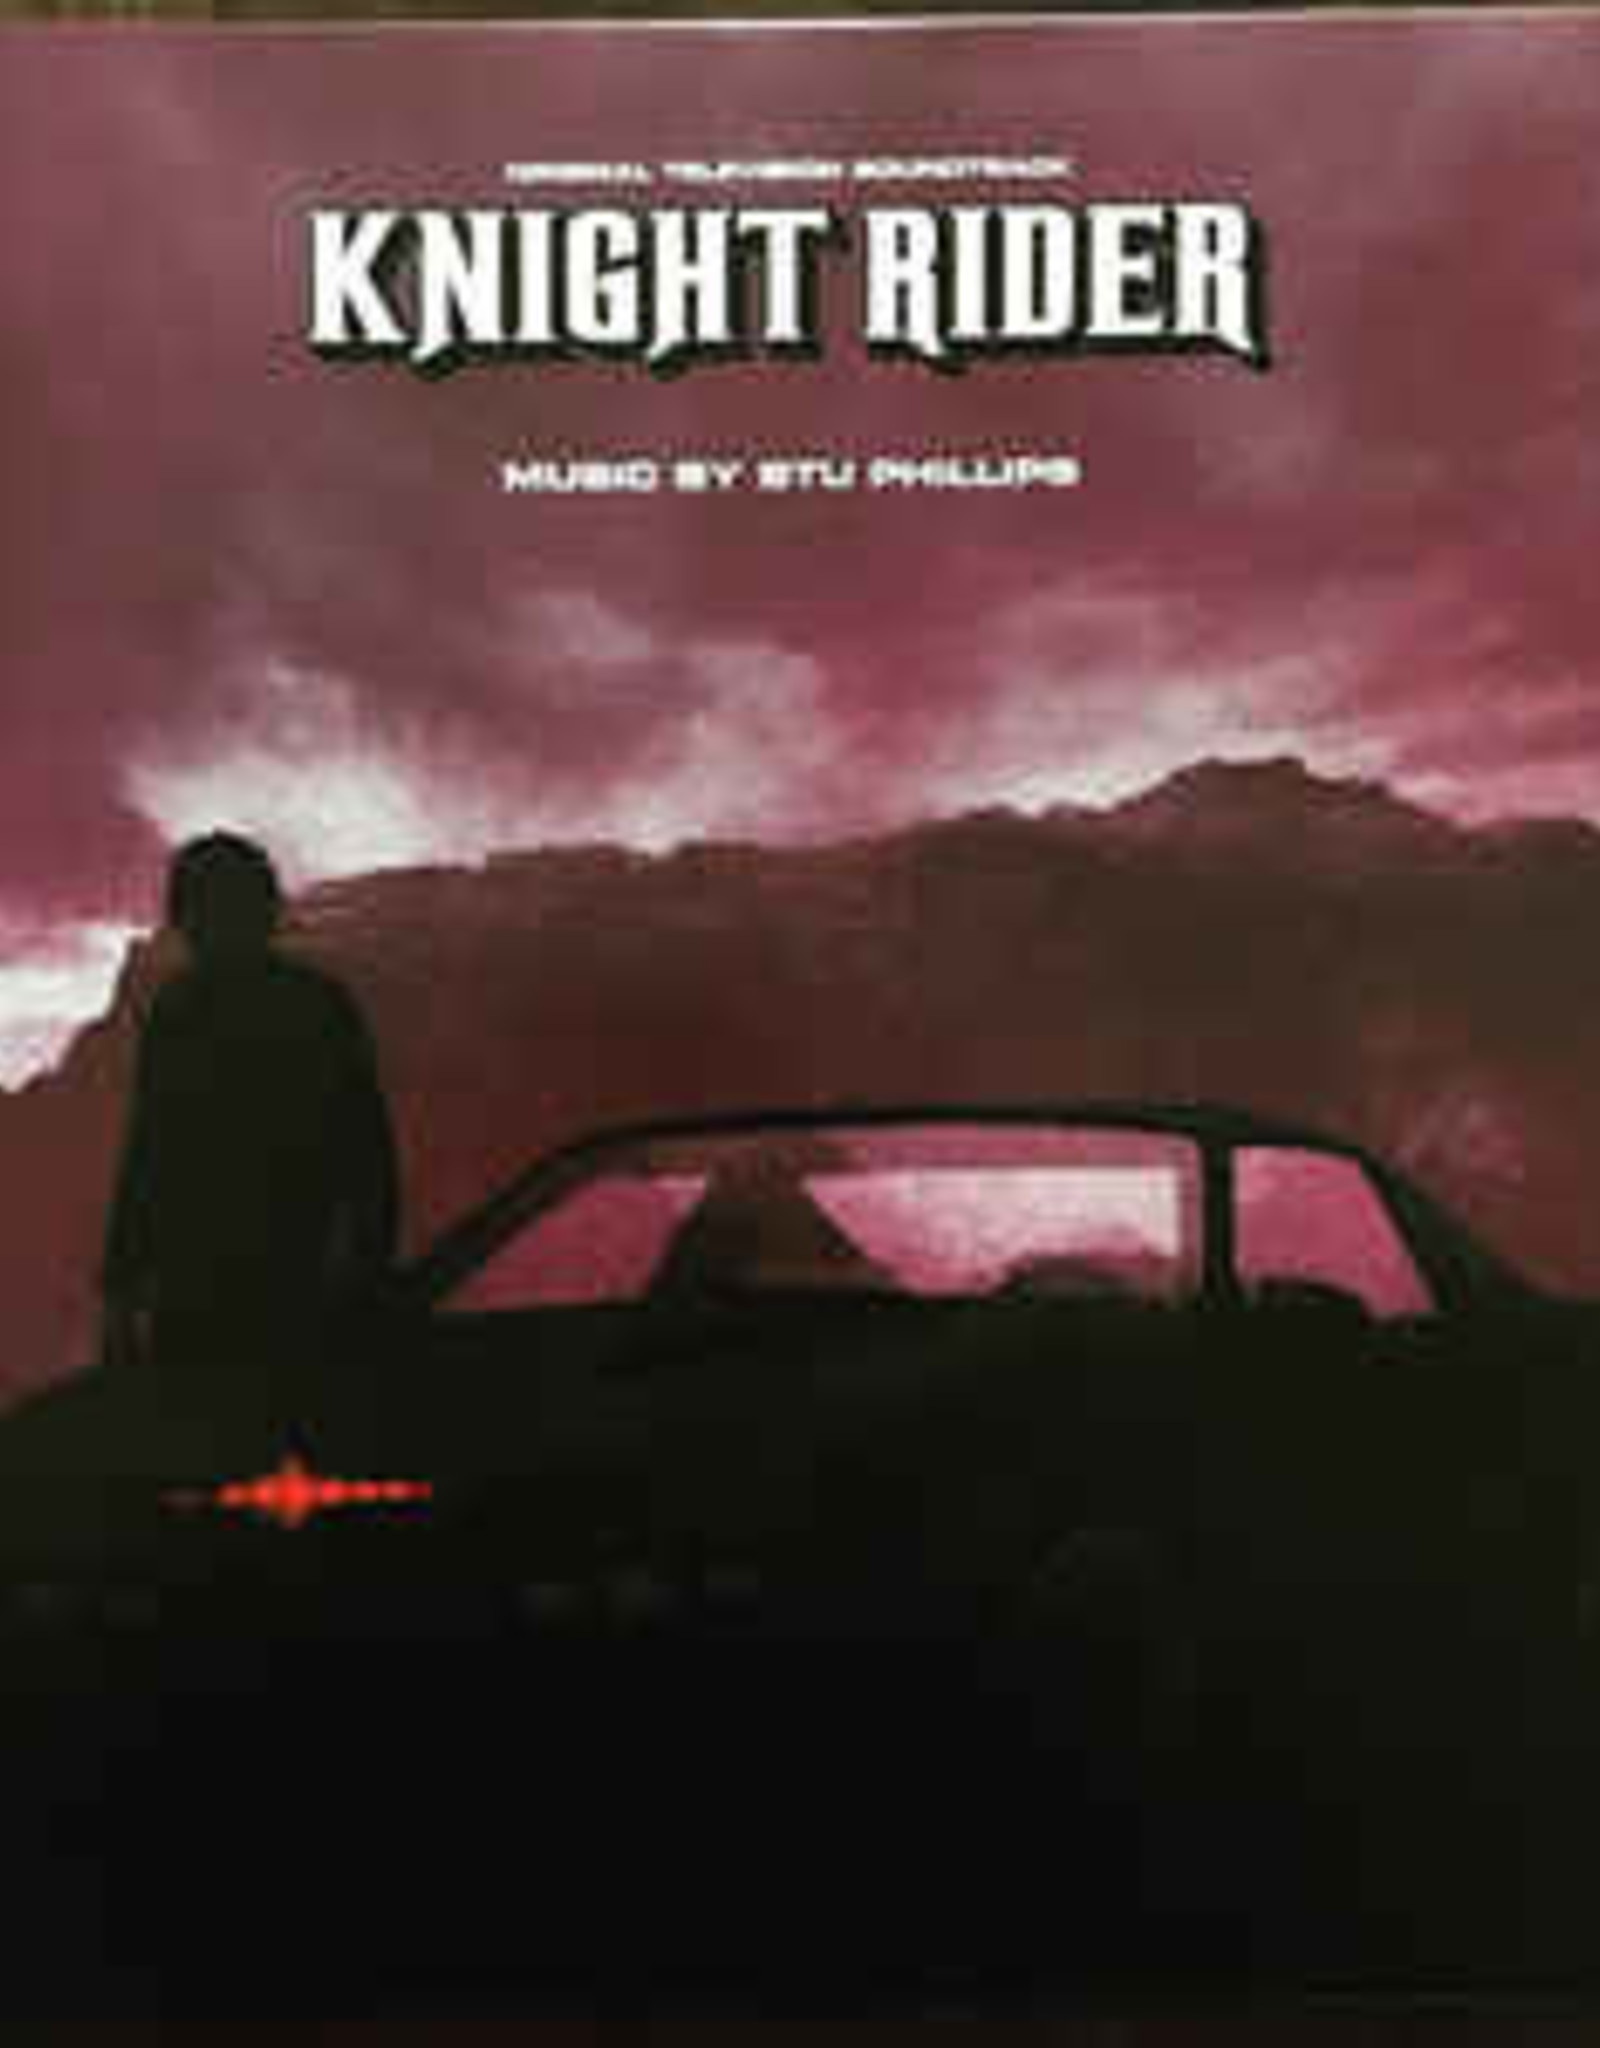 Stu Phillips - Knight Rider Ost (2Lp/Gatefold) (RSD 2019)